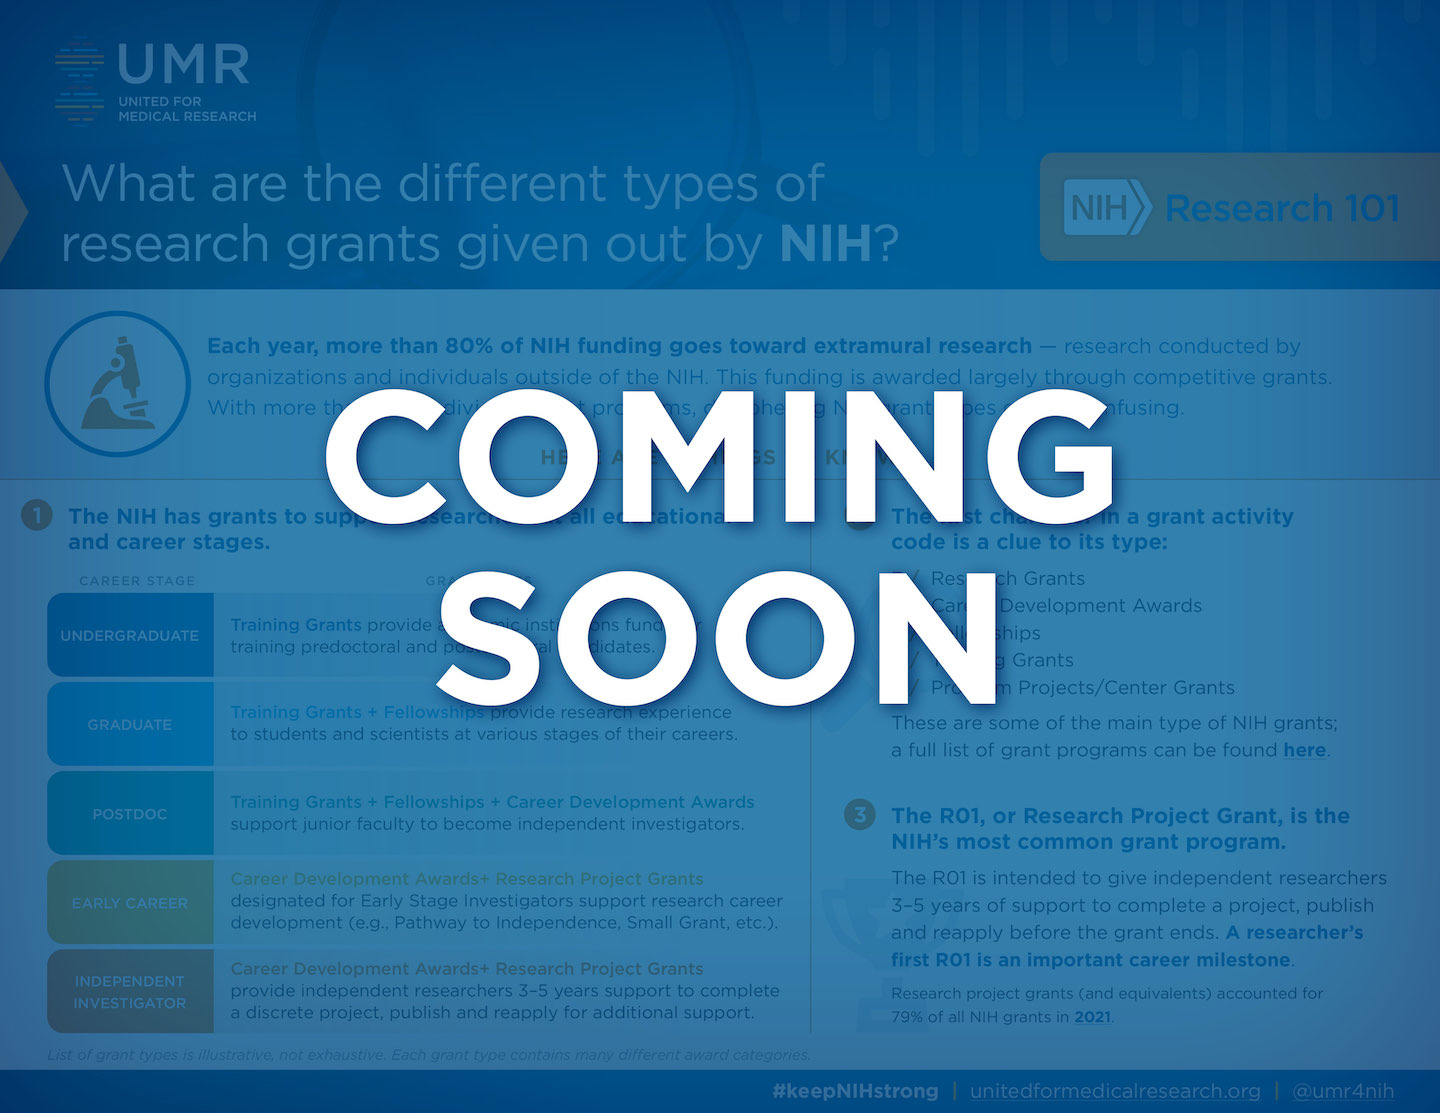 NIH-Research-101-Fact-Sheet-Series-Grants-Coming-Soon